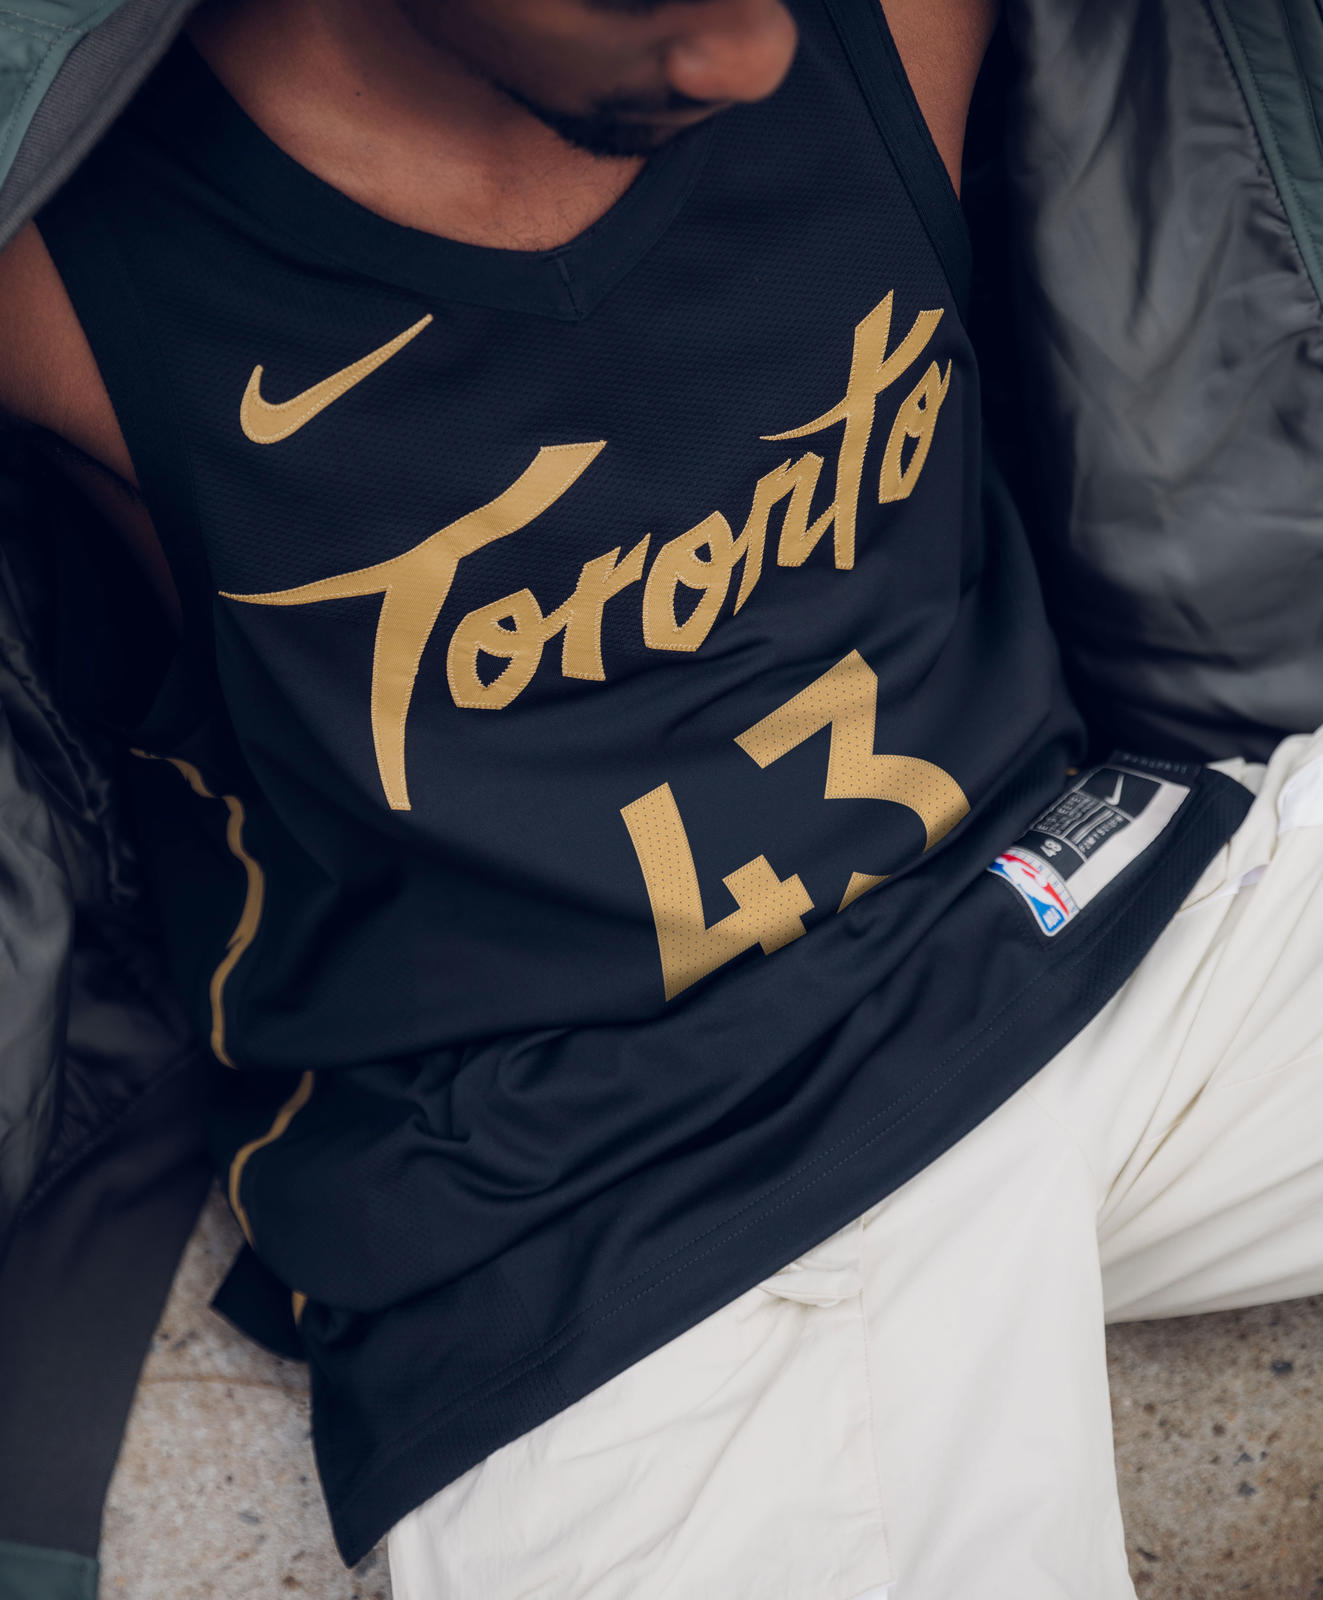 Mackubex - 2019-2020 NBA Nike City Edition Uniforms by Pep